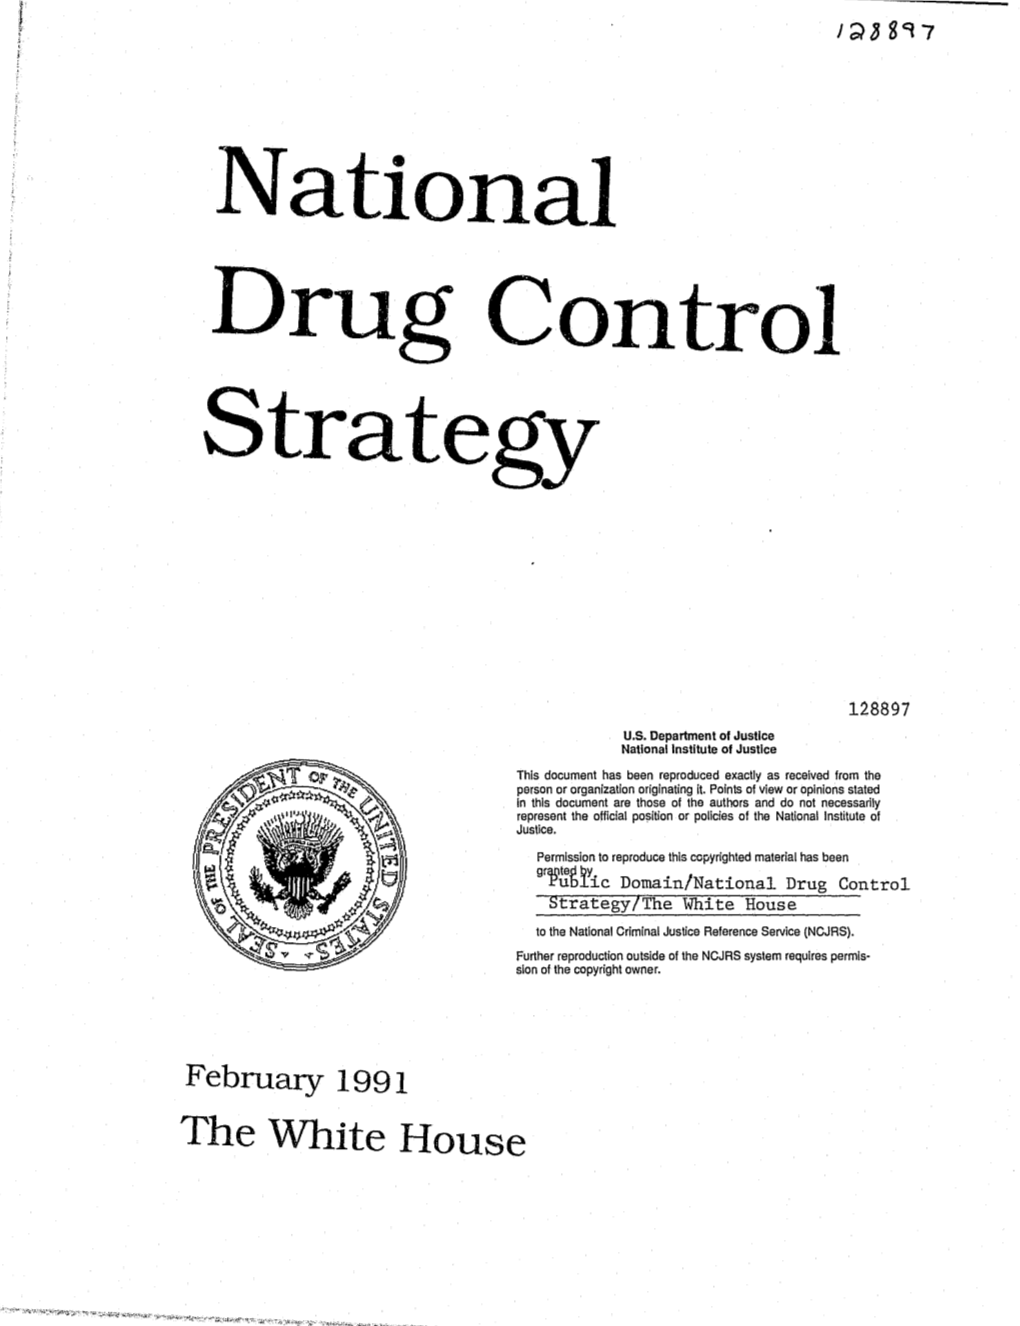 National Drug Control Strategy, February 1991